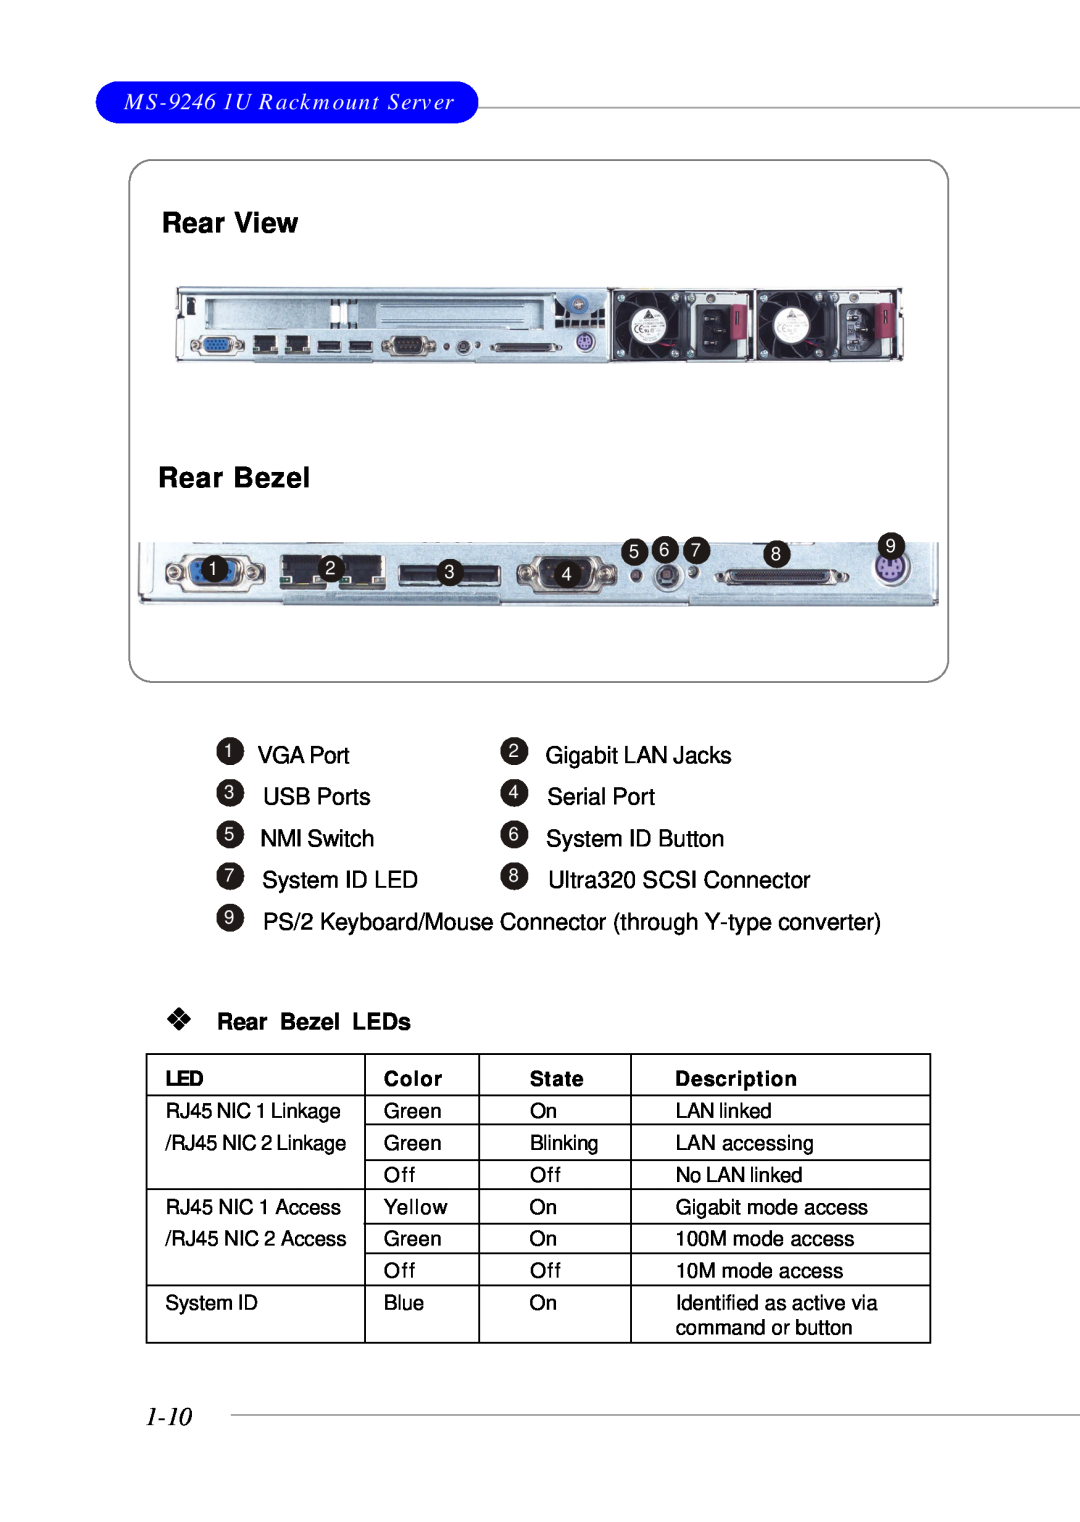 MSI Rear View Rear Bezel, 1-10, MS-9246 1U Rackmount Server, VGA Port, Gigabit LAN Jacks, USB Ports, Serial Port, Color 